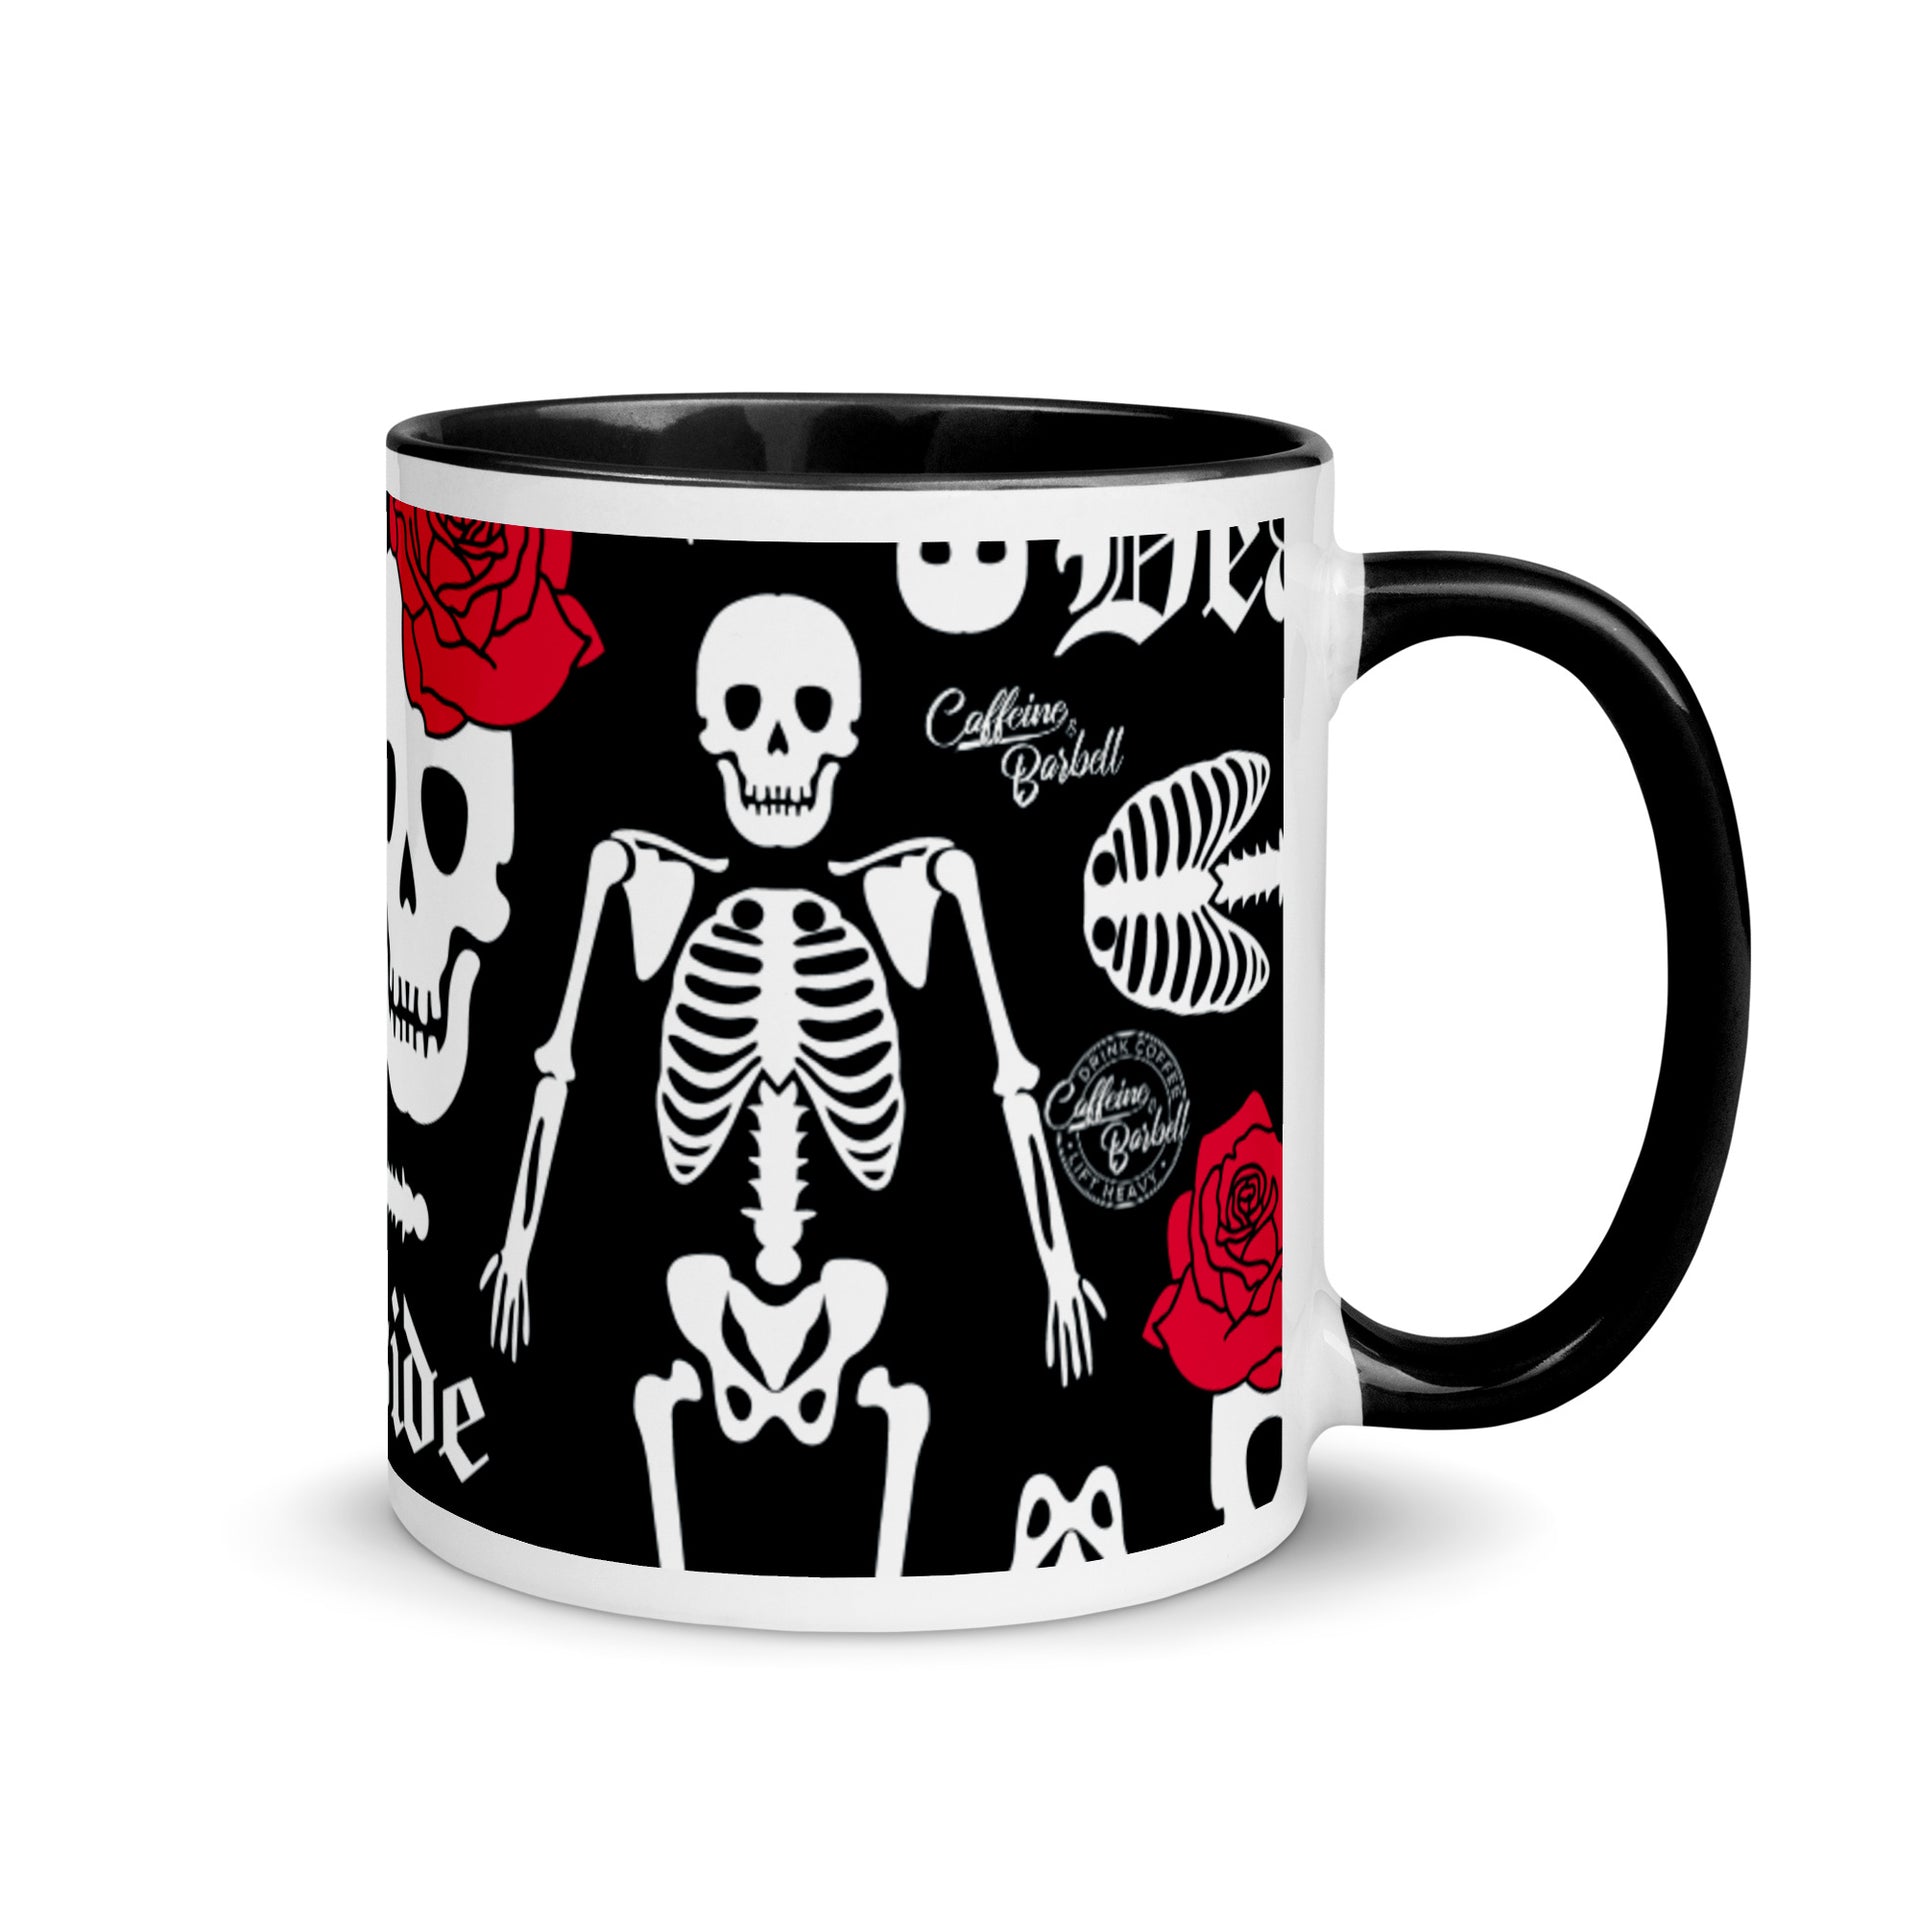 Mug – Caffeine & Barbell